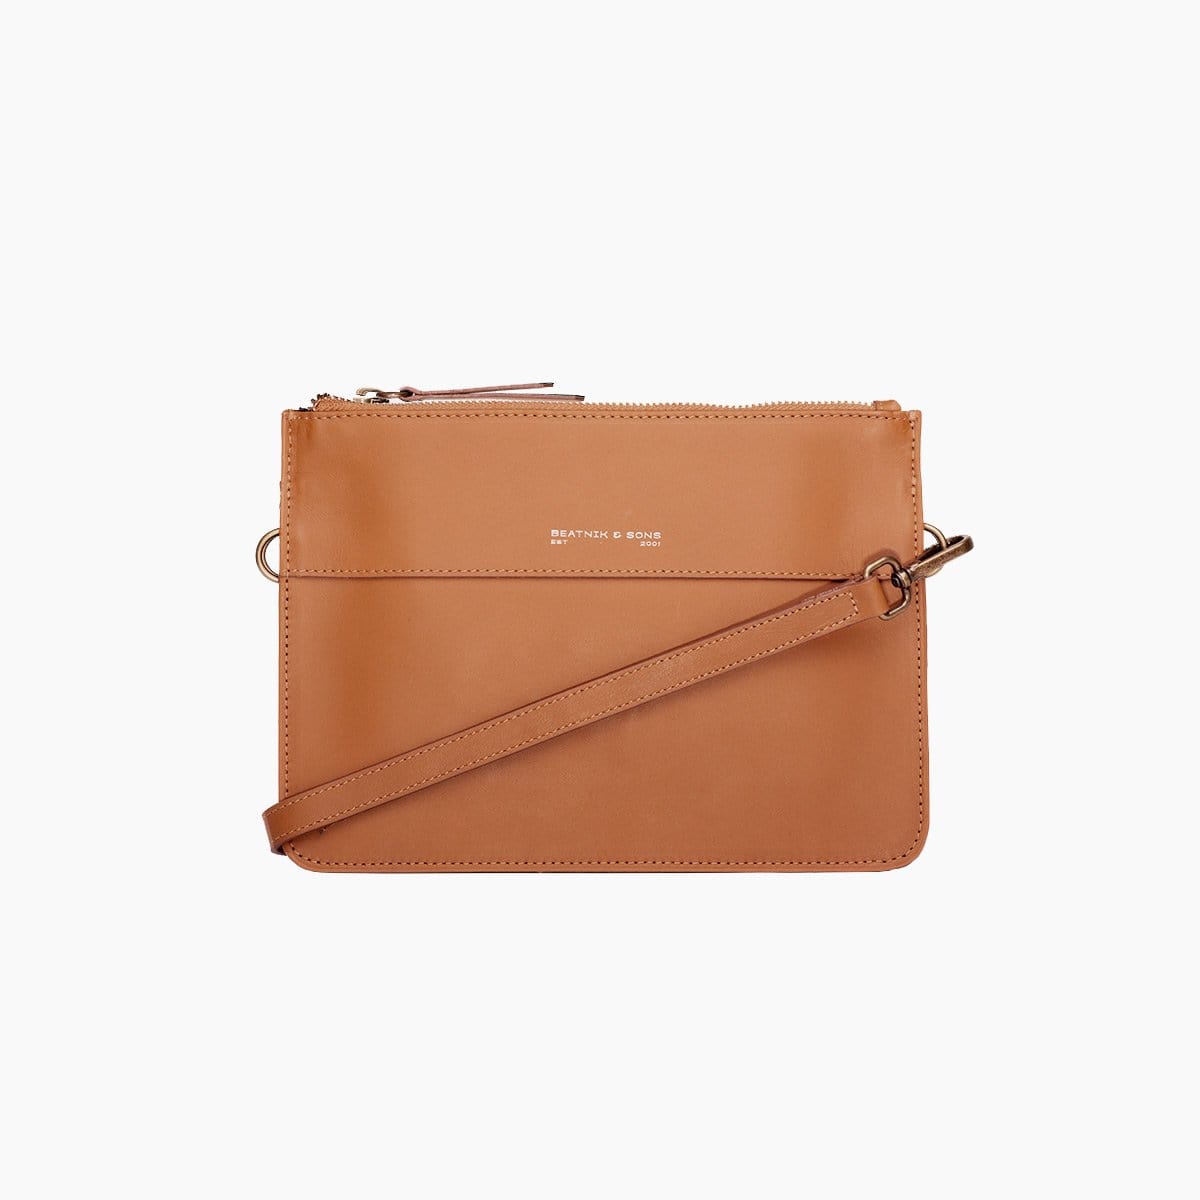 Beatnik & Sons Leather handbags Tan the Terry flat bag